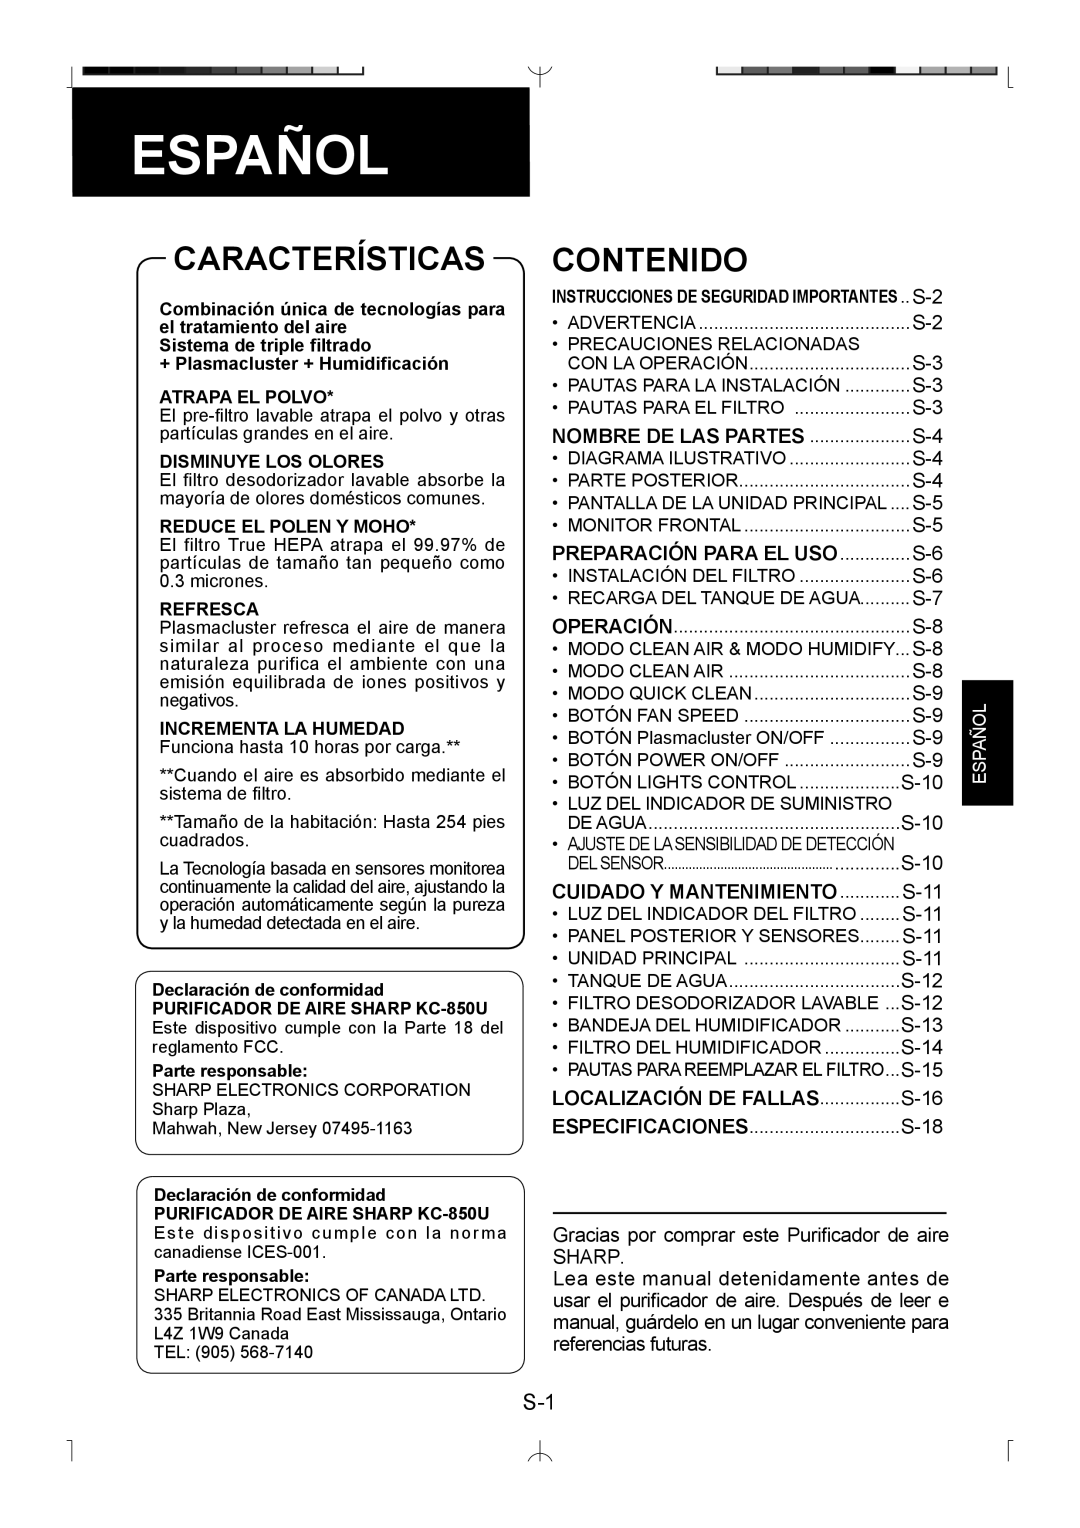 Sharp KC-850U operation manual Español, Características, Contenido 